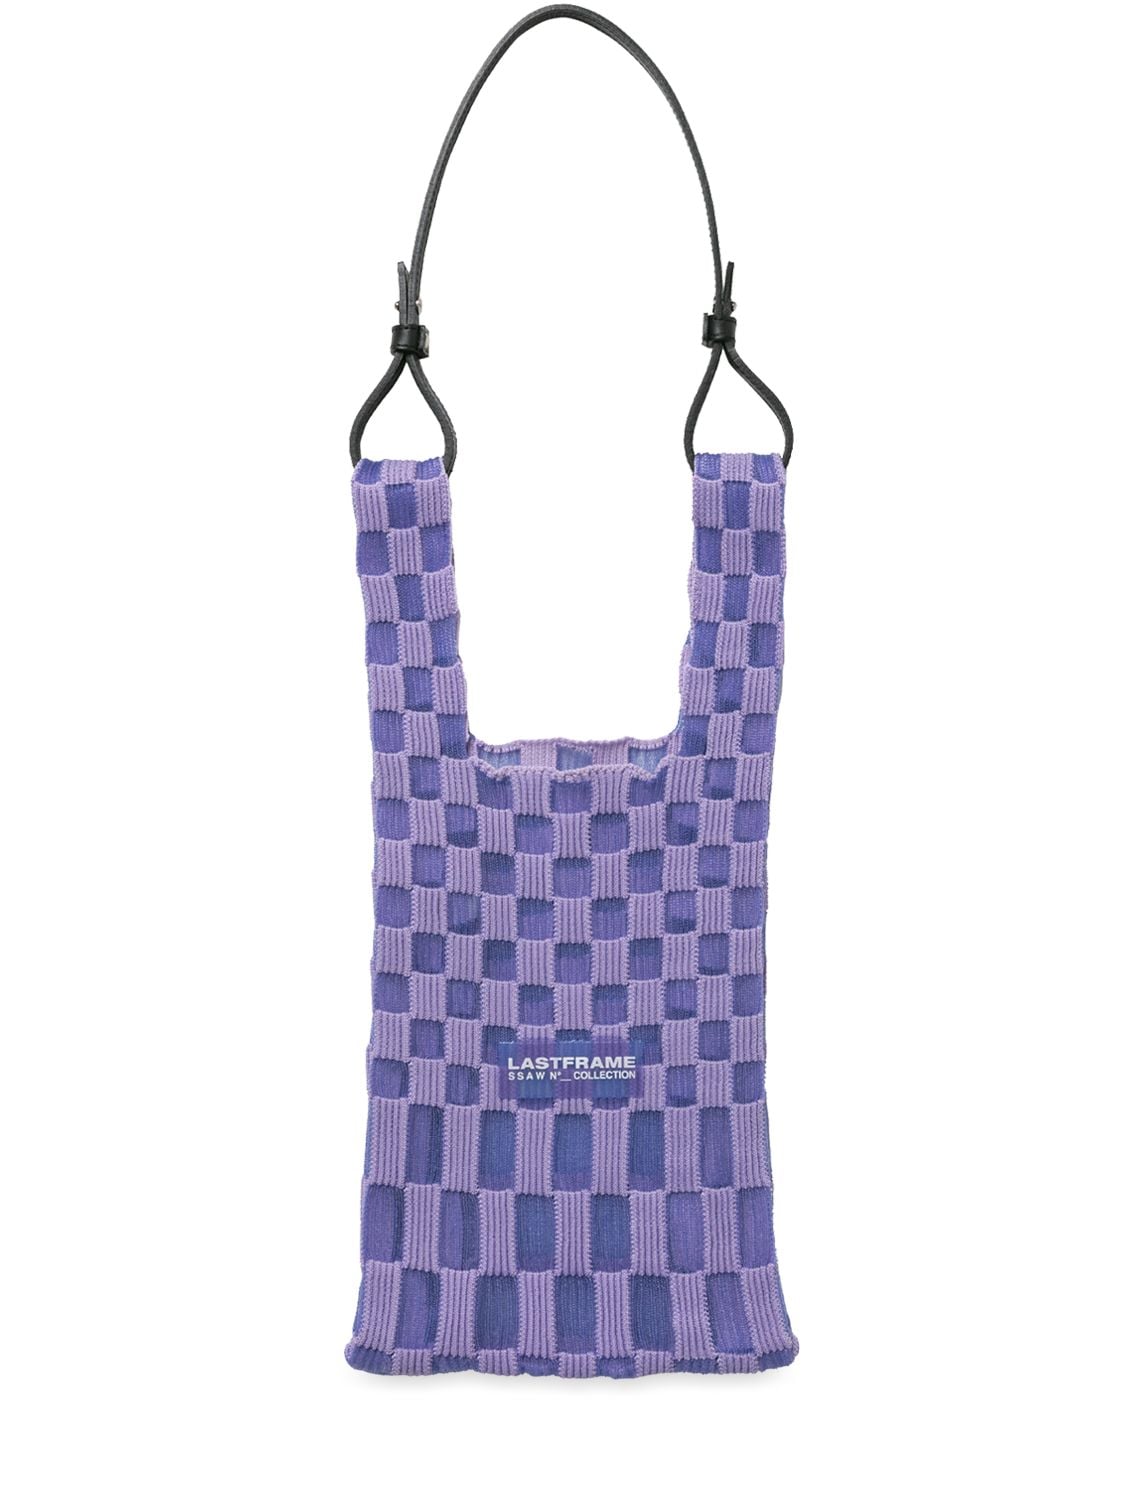 Lastframe Small Sheer Ichimatsu Market Bag In Lavender | ModeSens